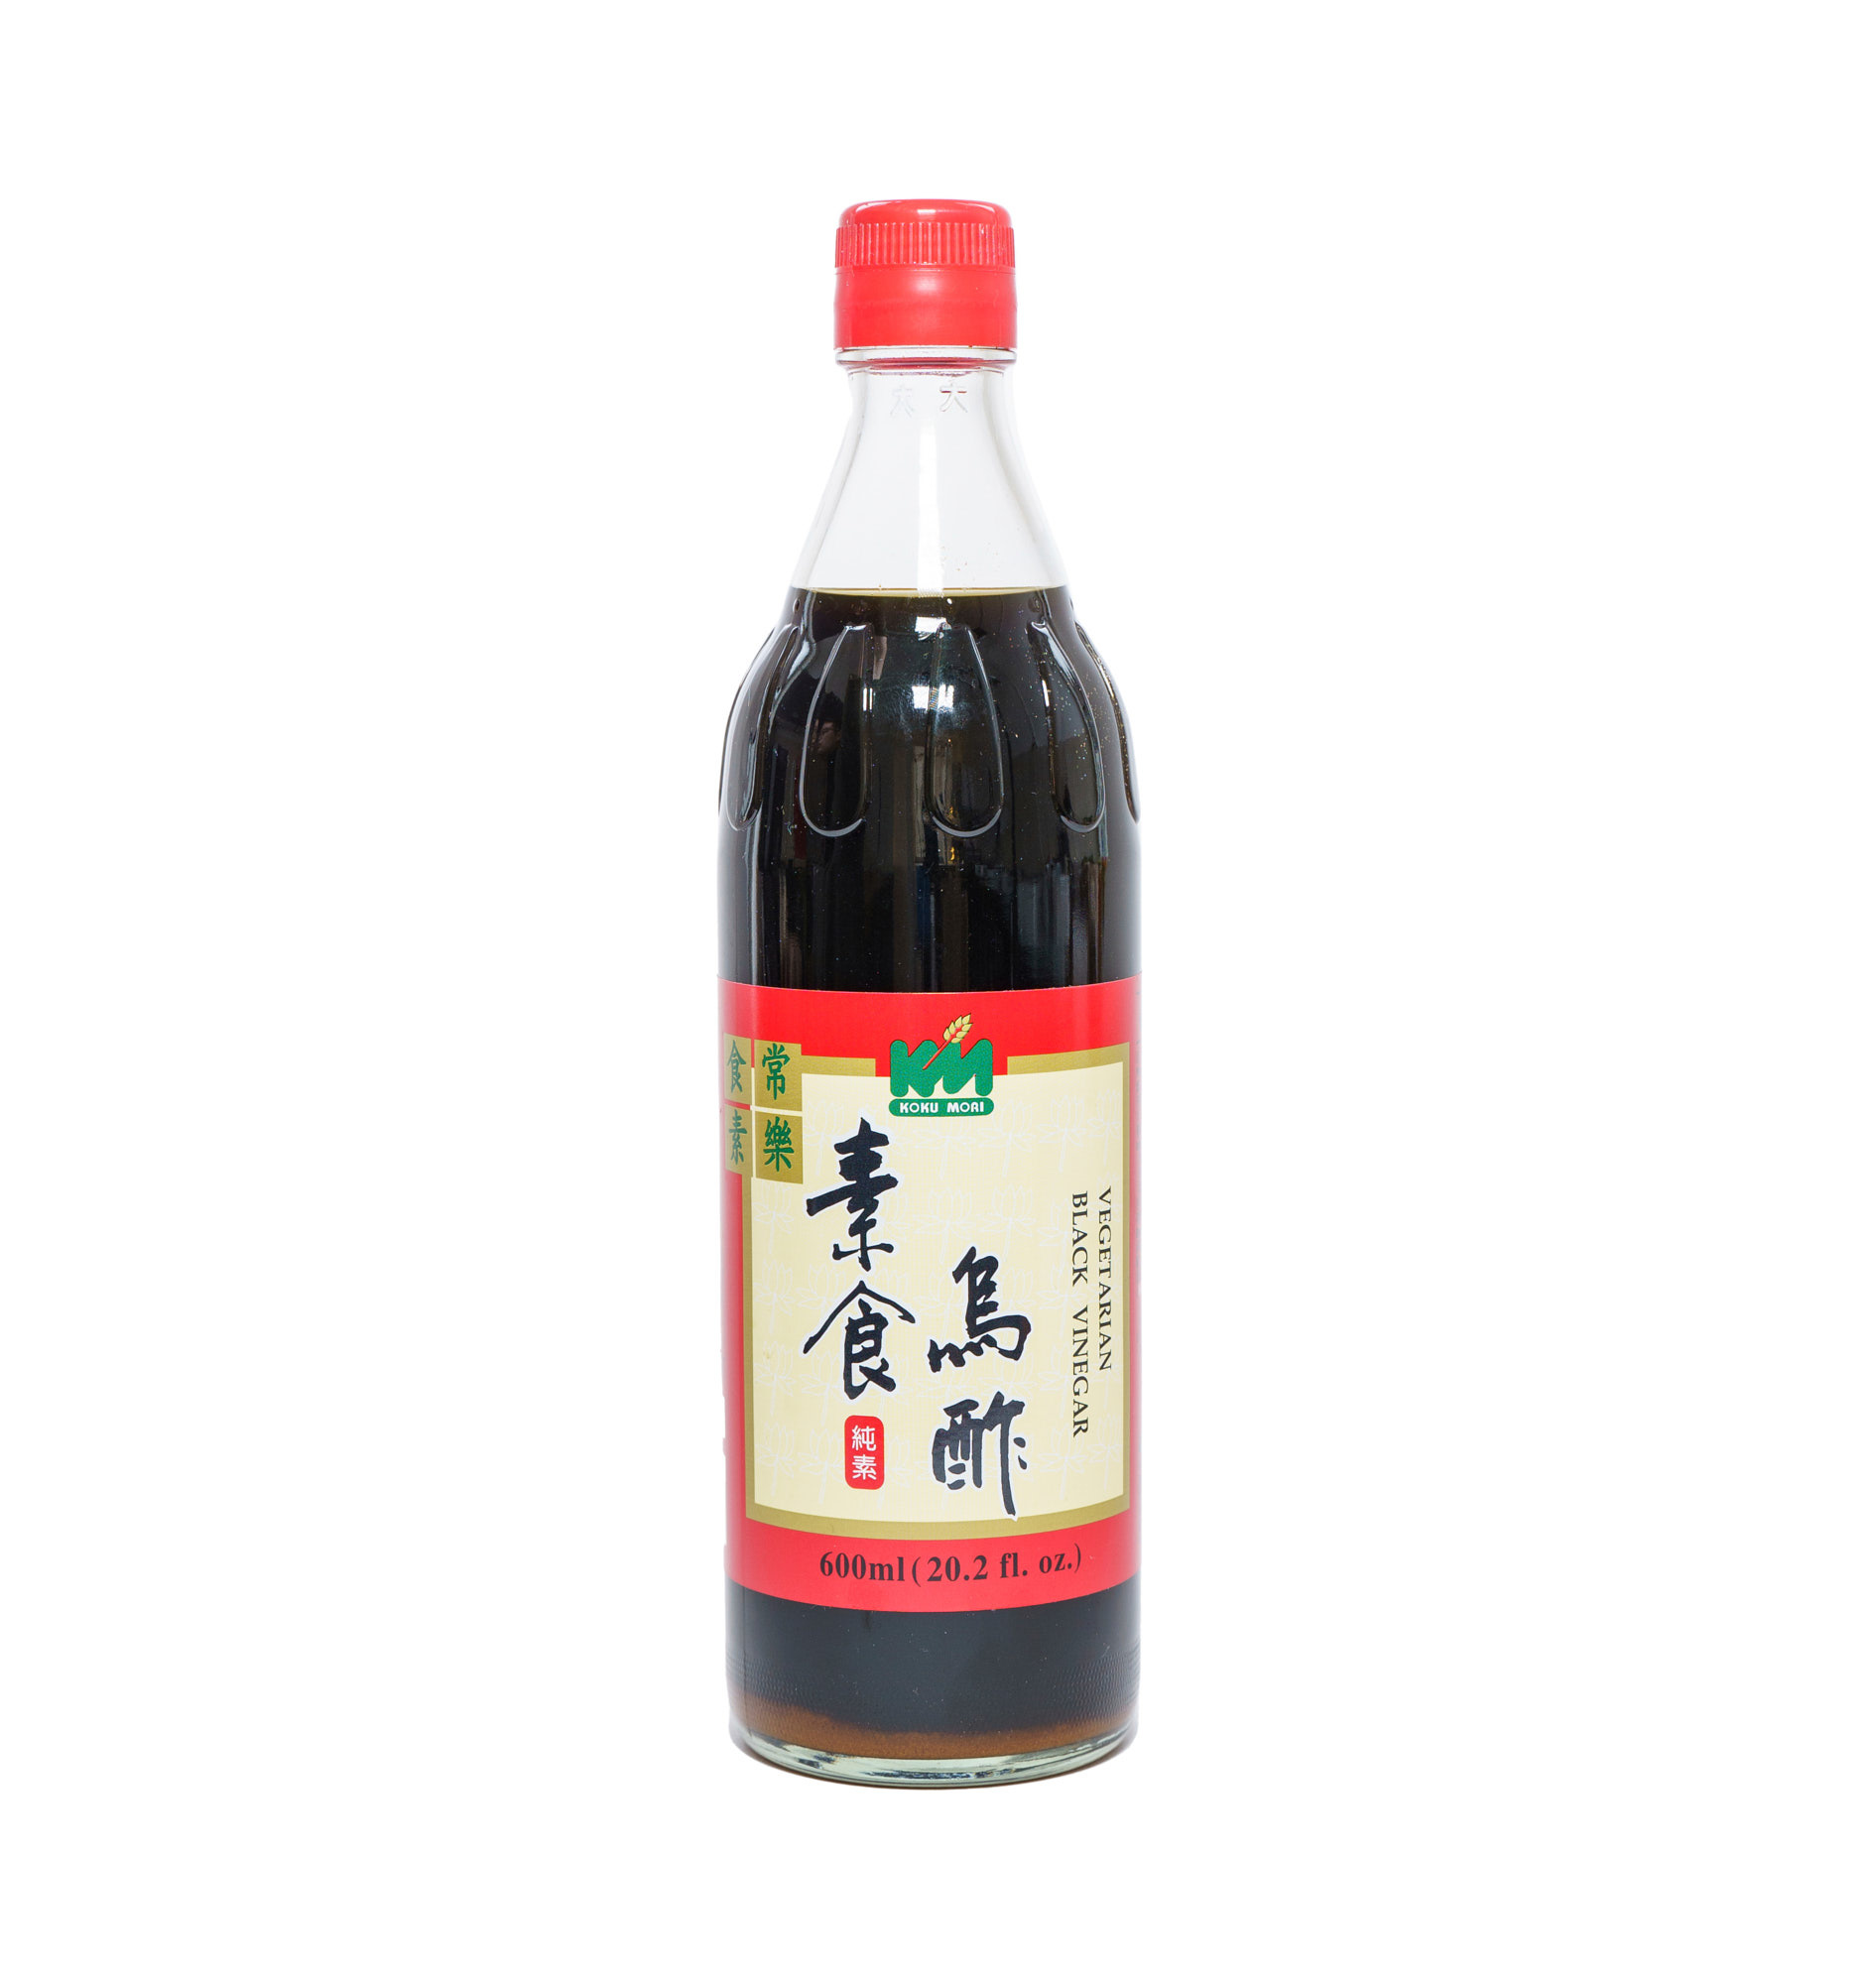 KOKUMORI KOKUMORI Vegetarian Black Vinegar (600ml)